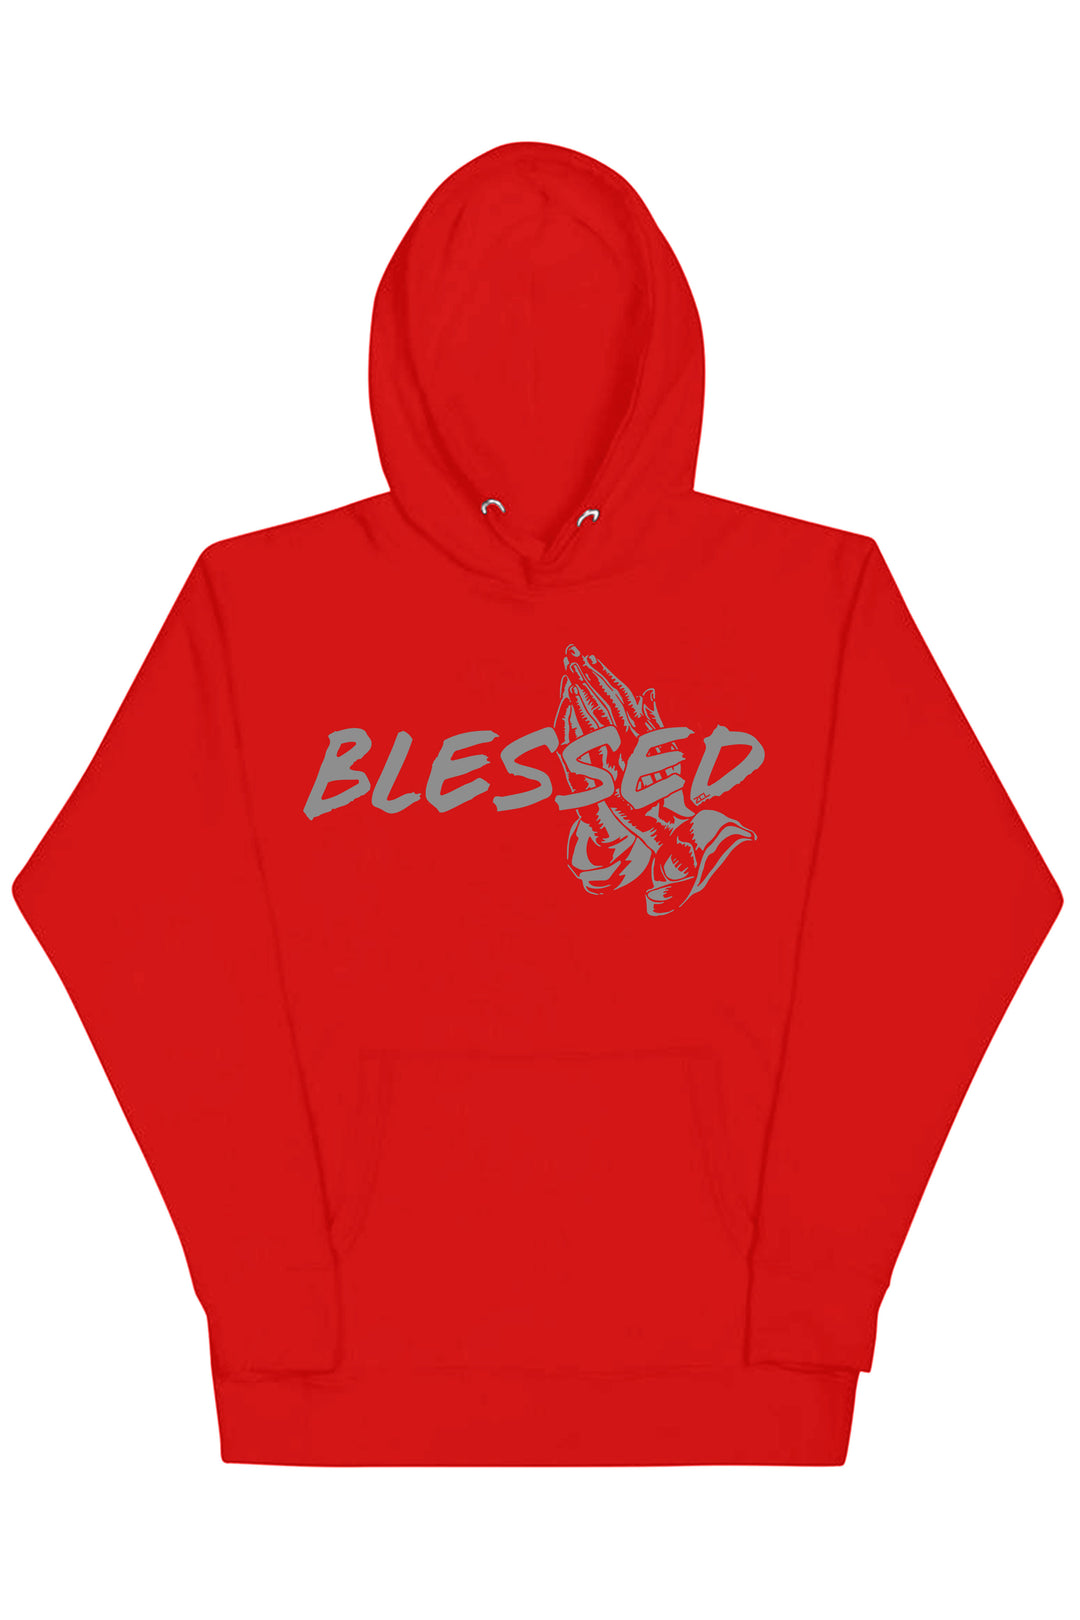 Blessed Hoodie (Grey Logo) - Zamage